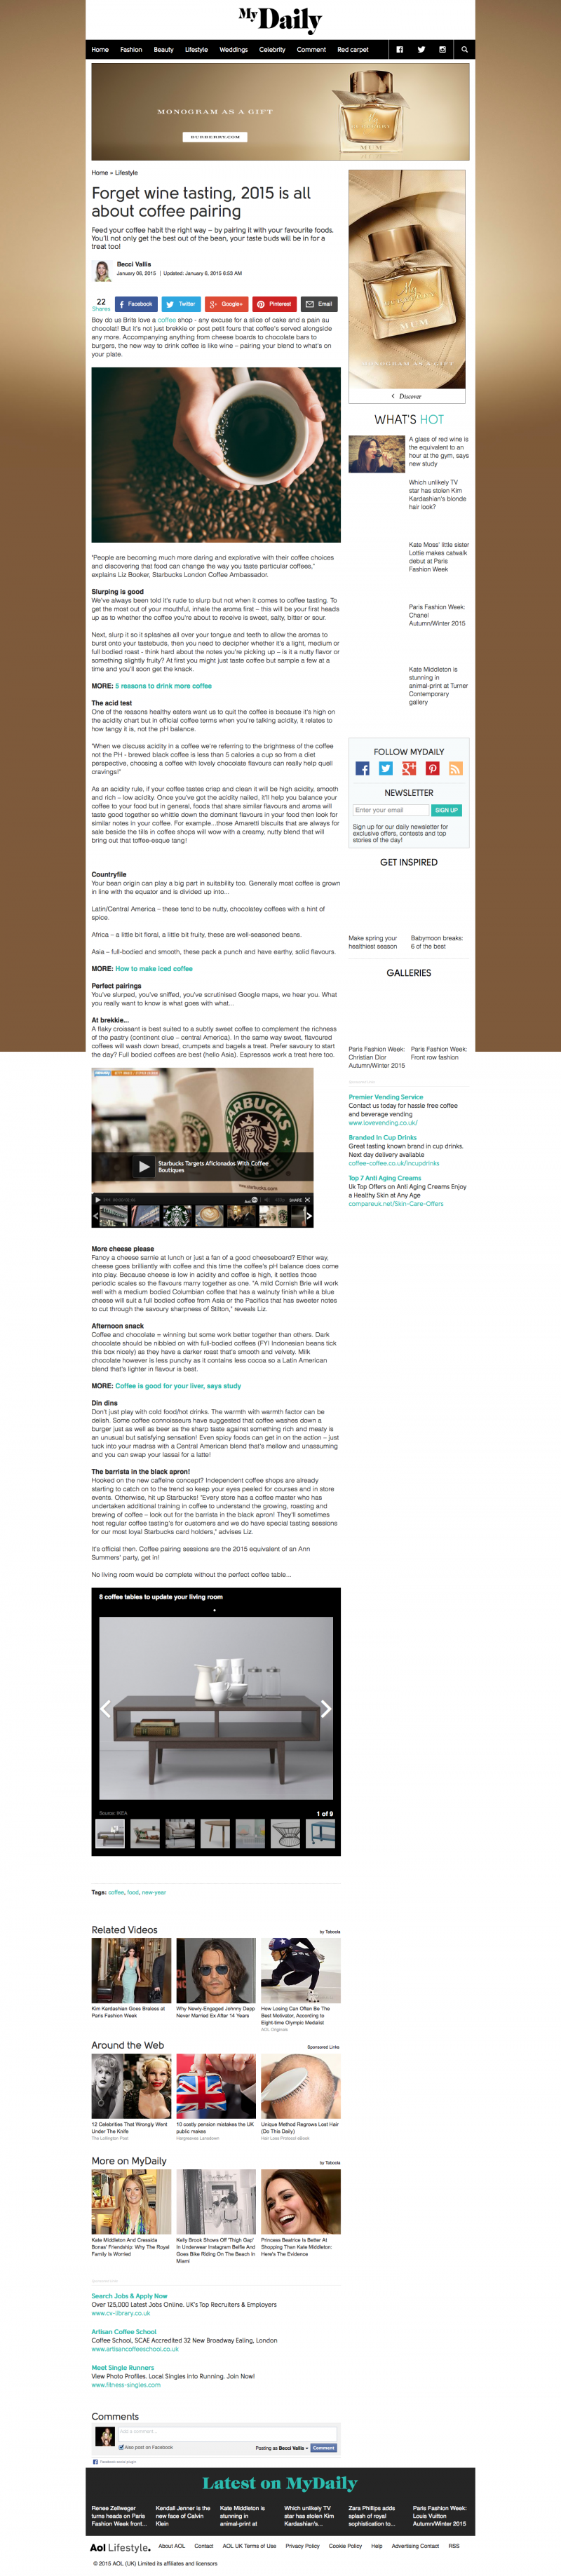 Coffee_pairing_2015_s_new_food_trend_-_MyDaily_UK_-_2015-03-11_21.12.24